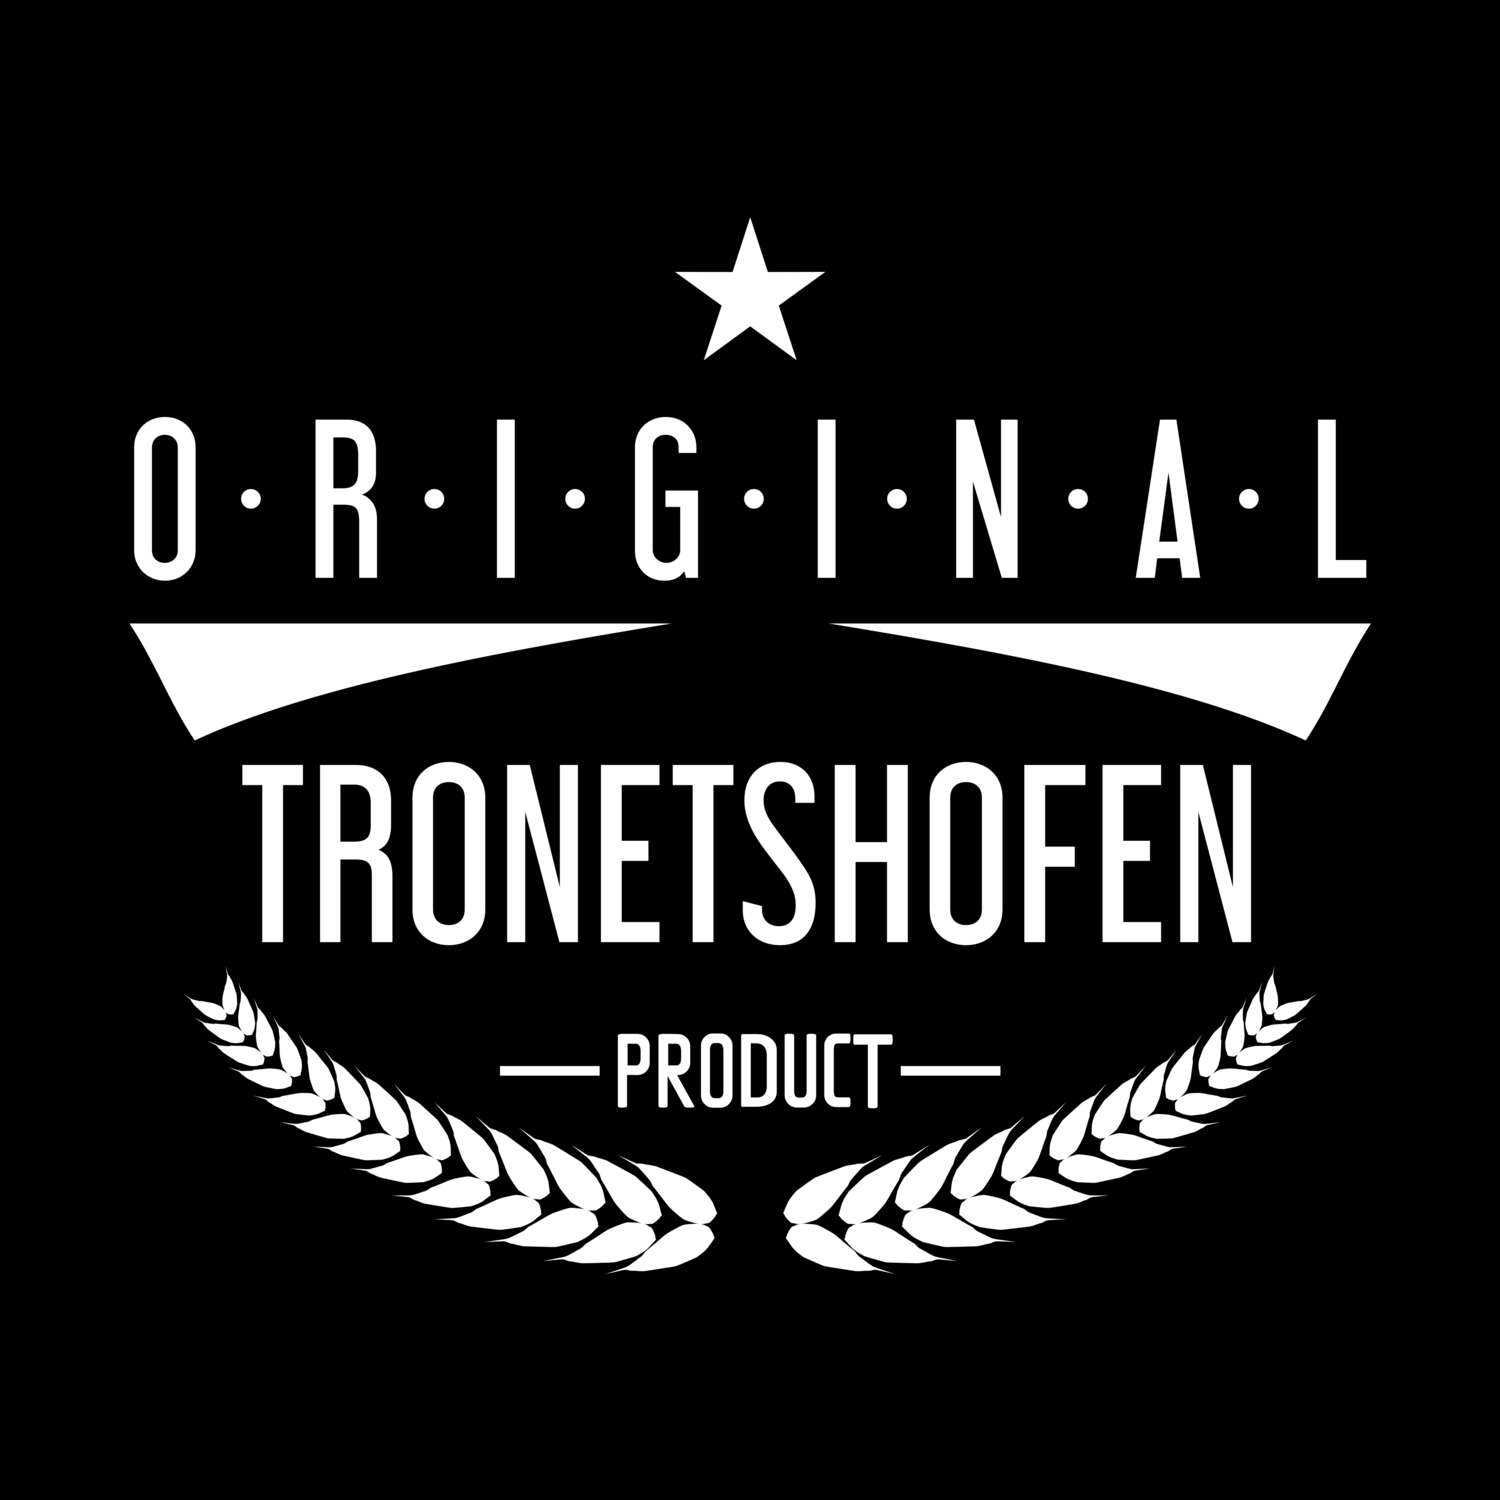 Tronetshofen T-Shirt »Original Product«